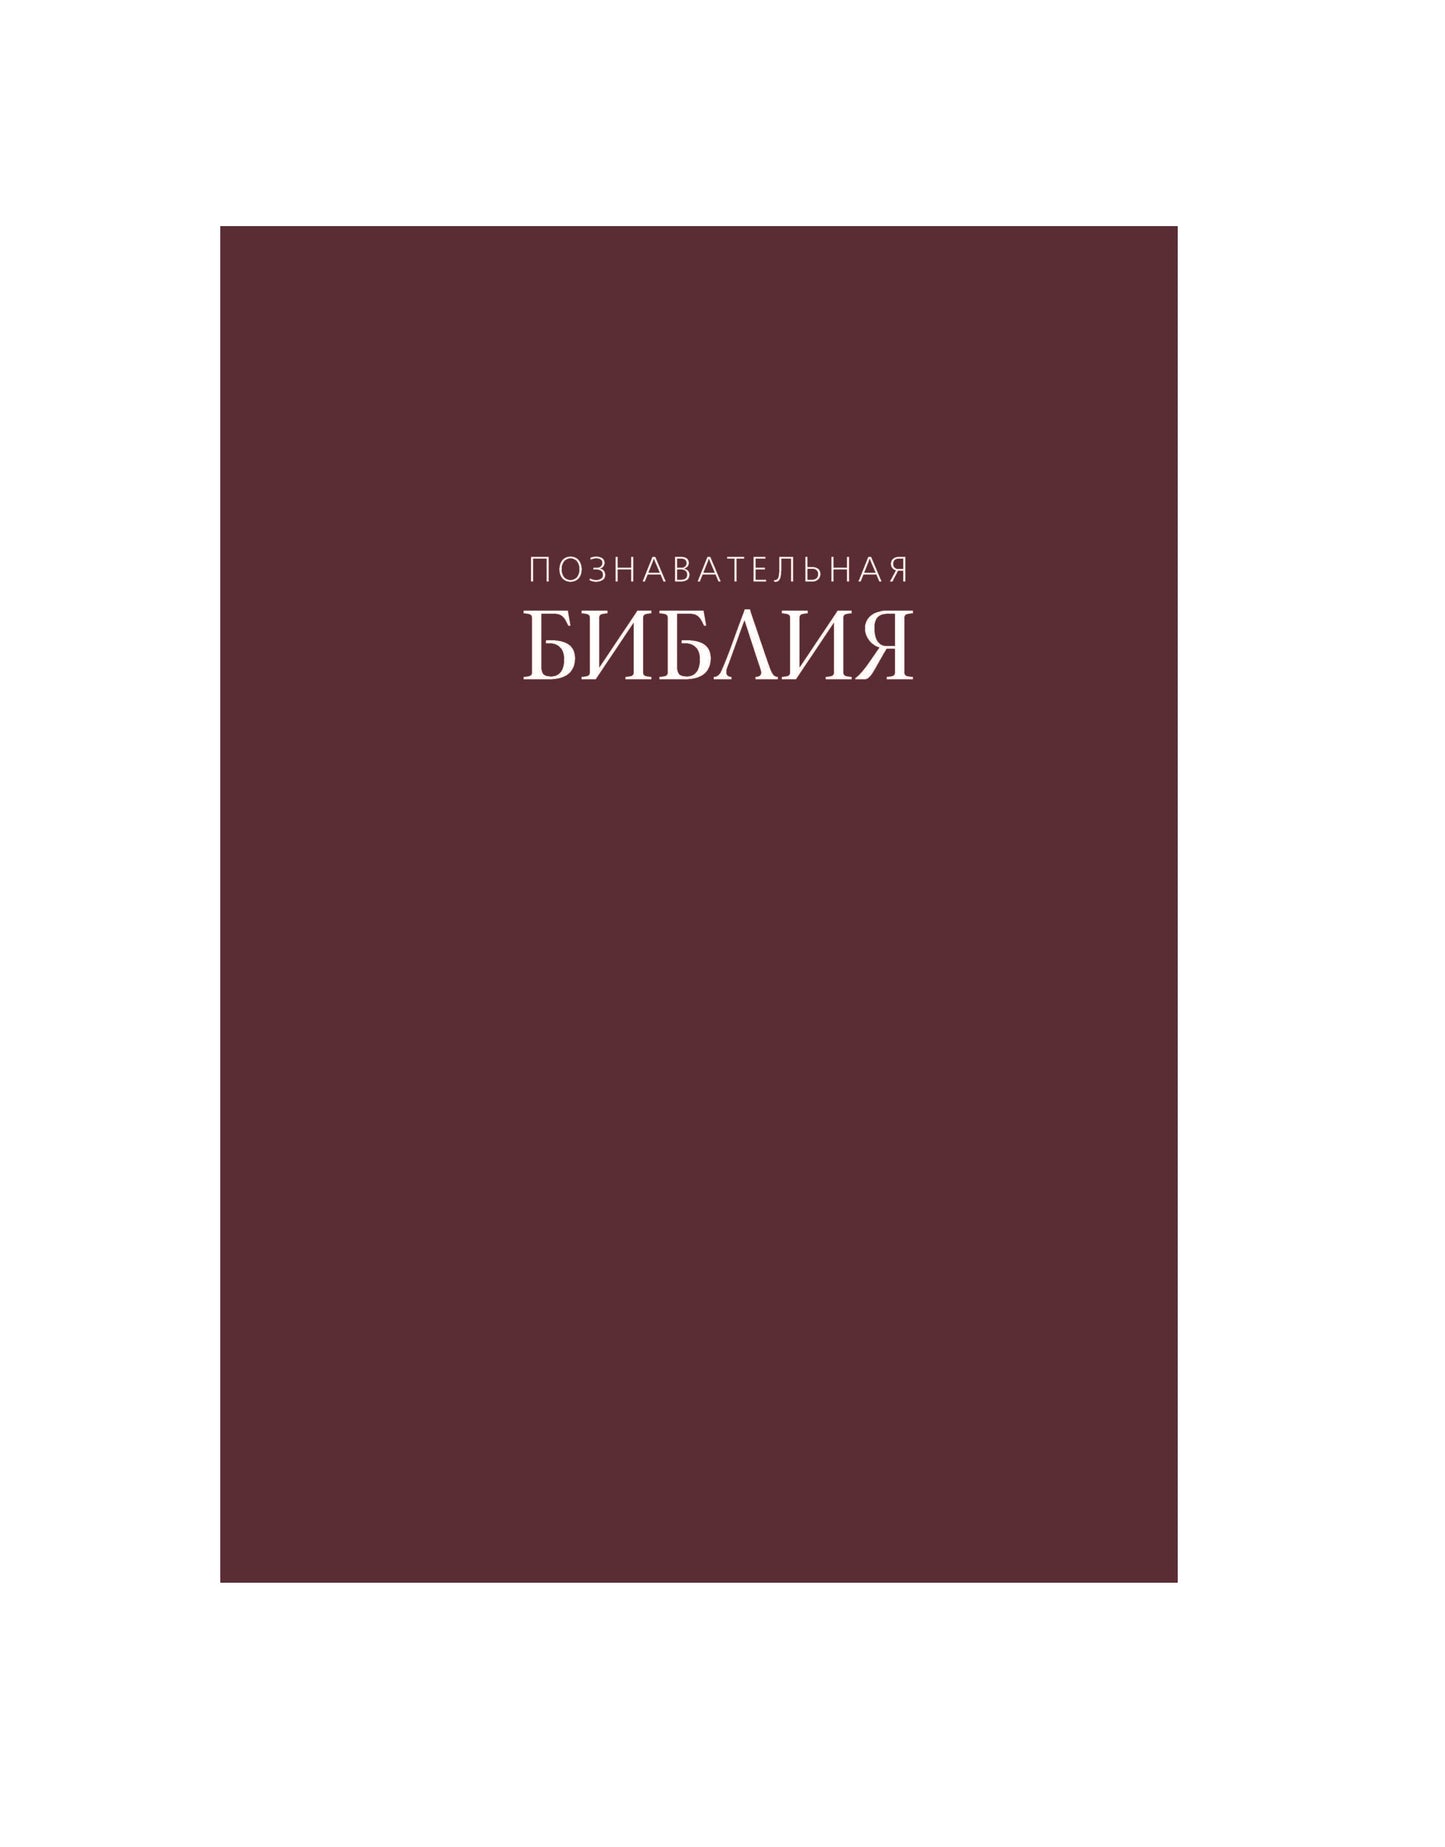 Russian Bible - Print on Demand